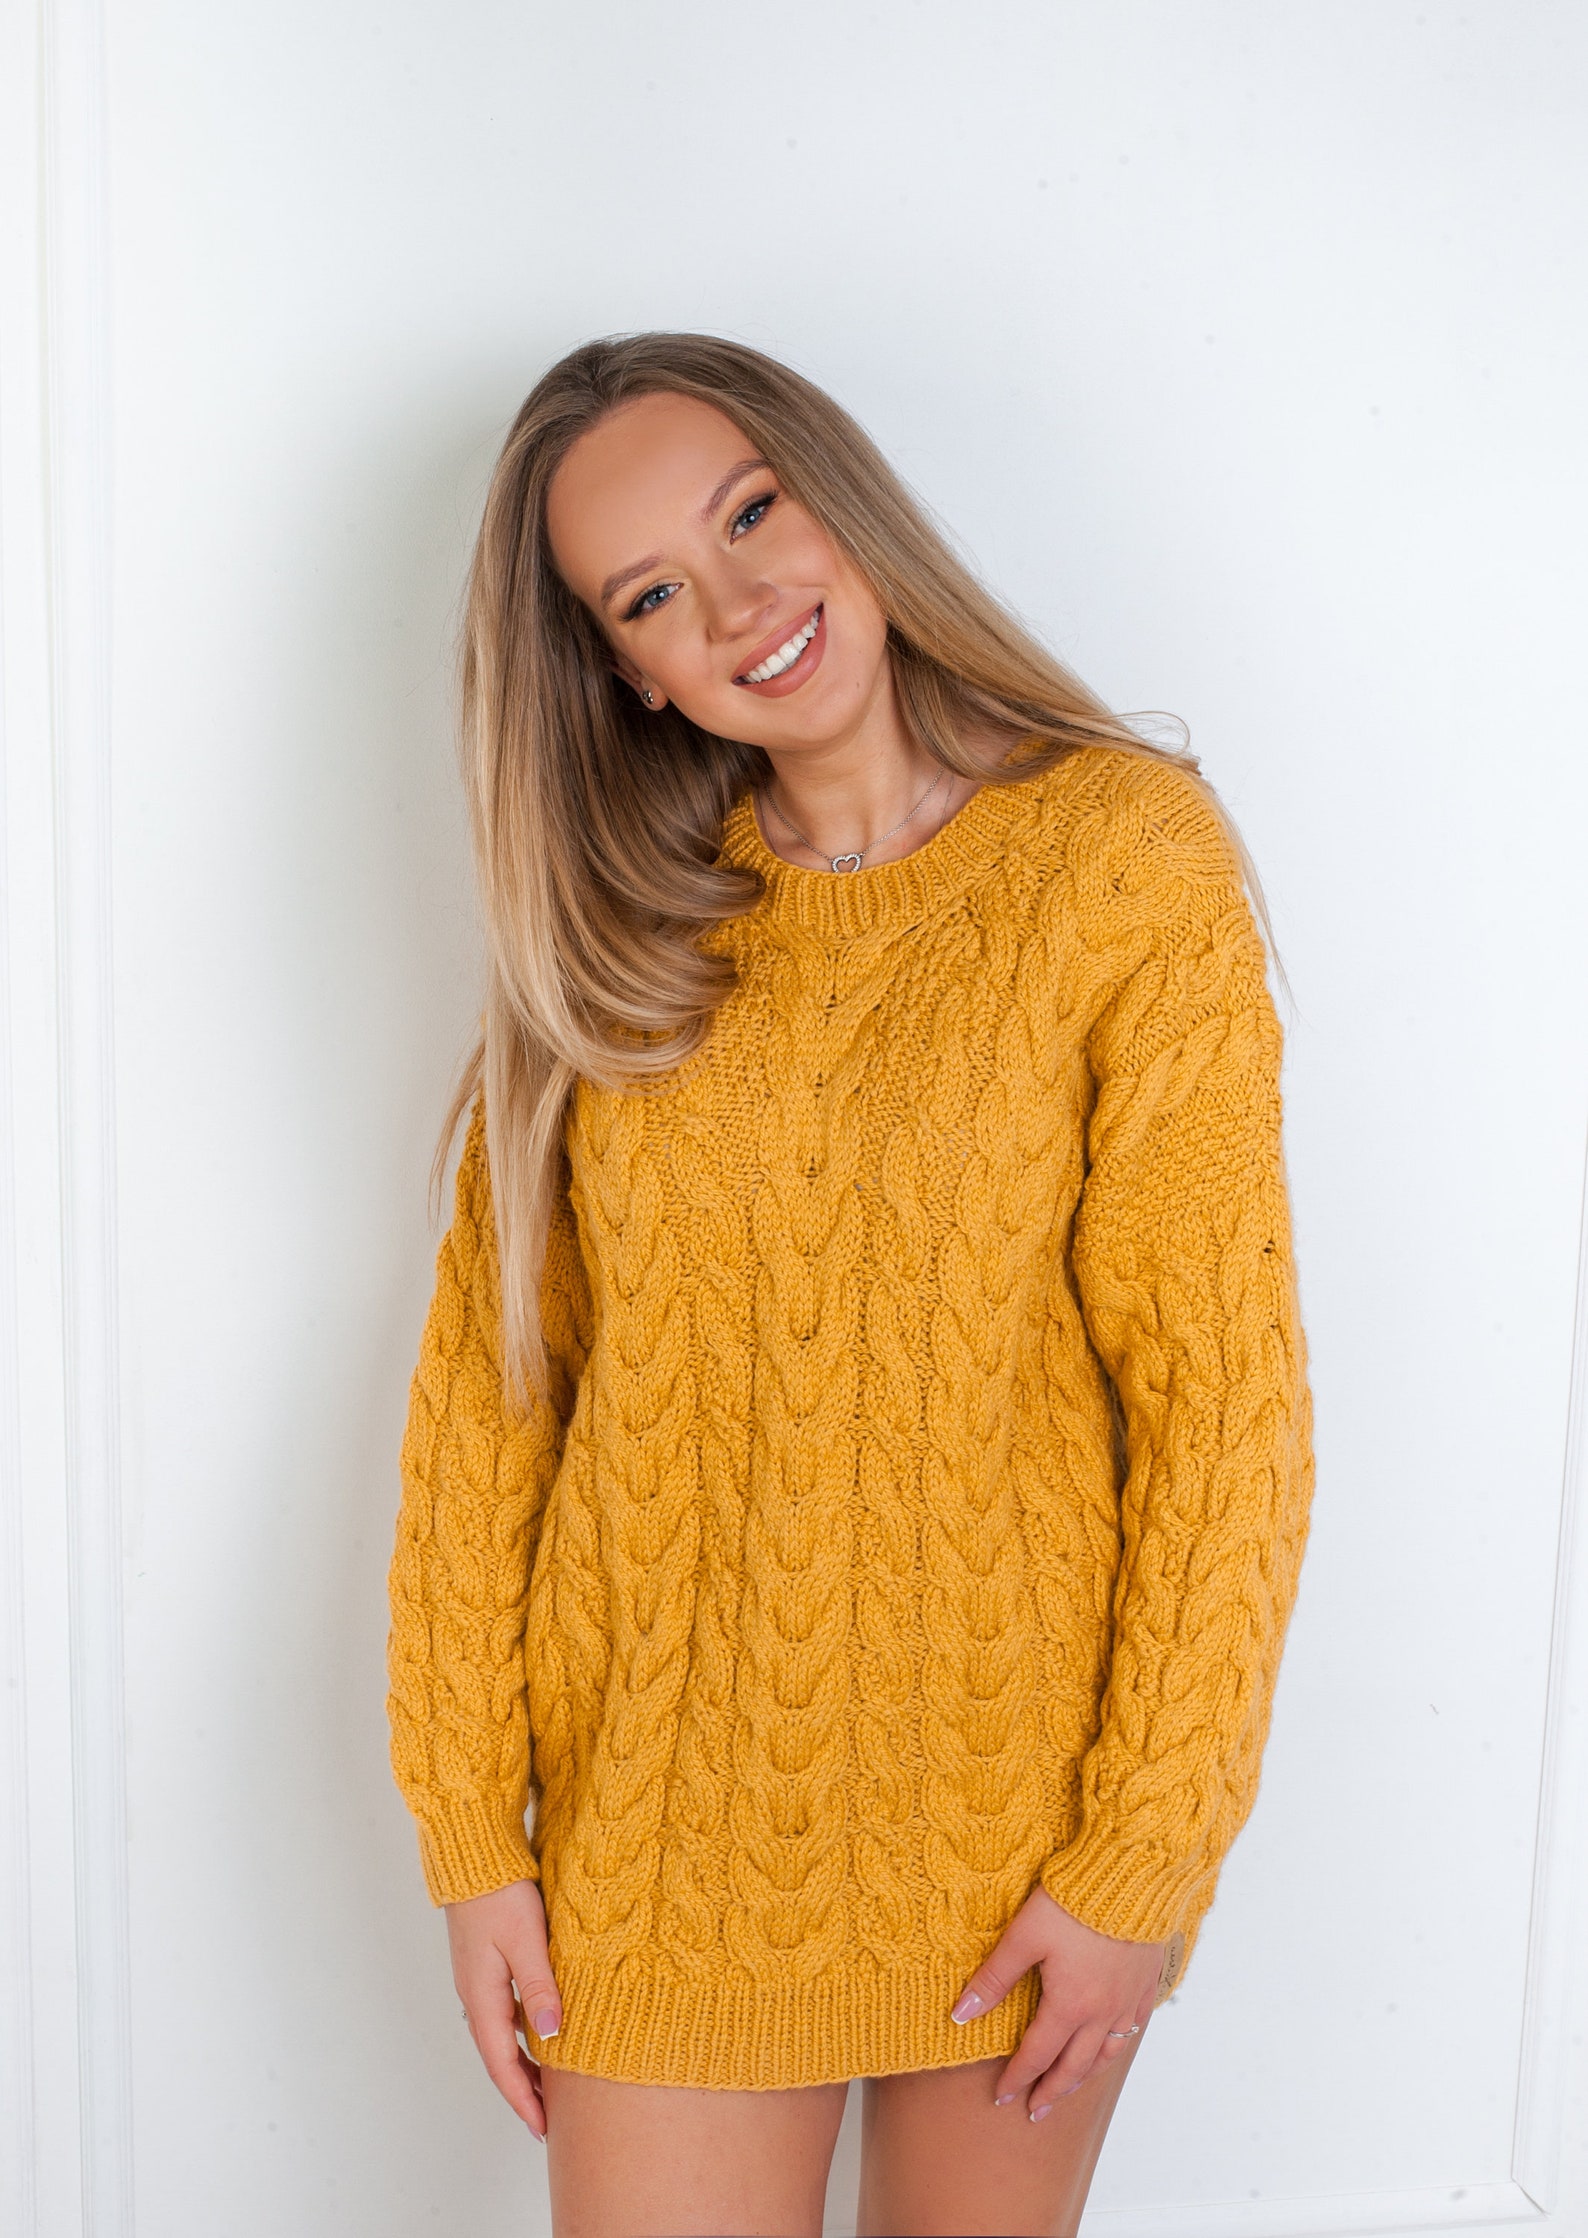 NEW Stylish Mustard color sweater Woman sweater Handmade | Etsy